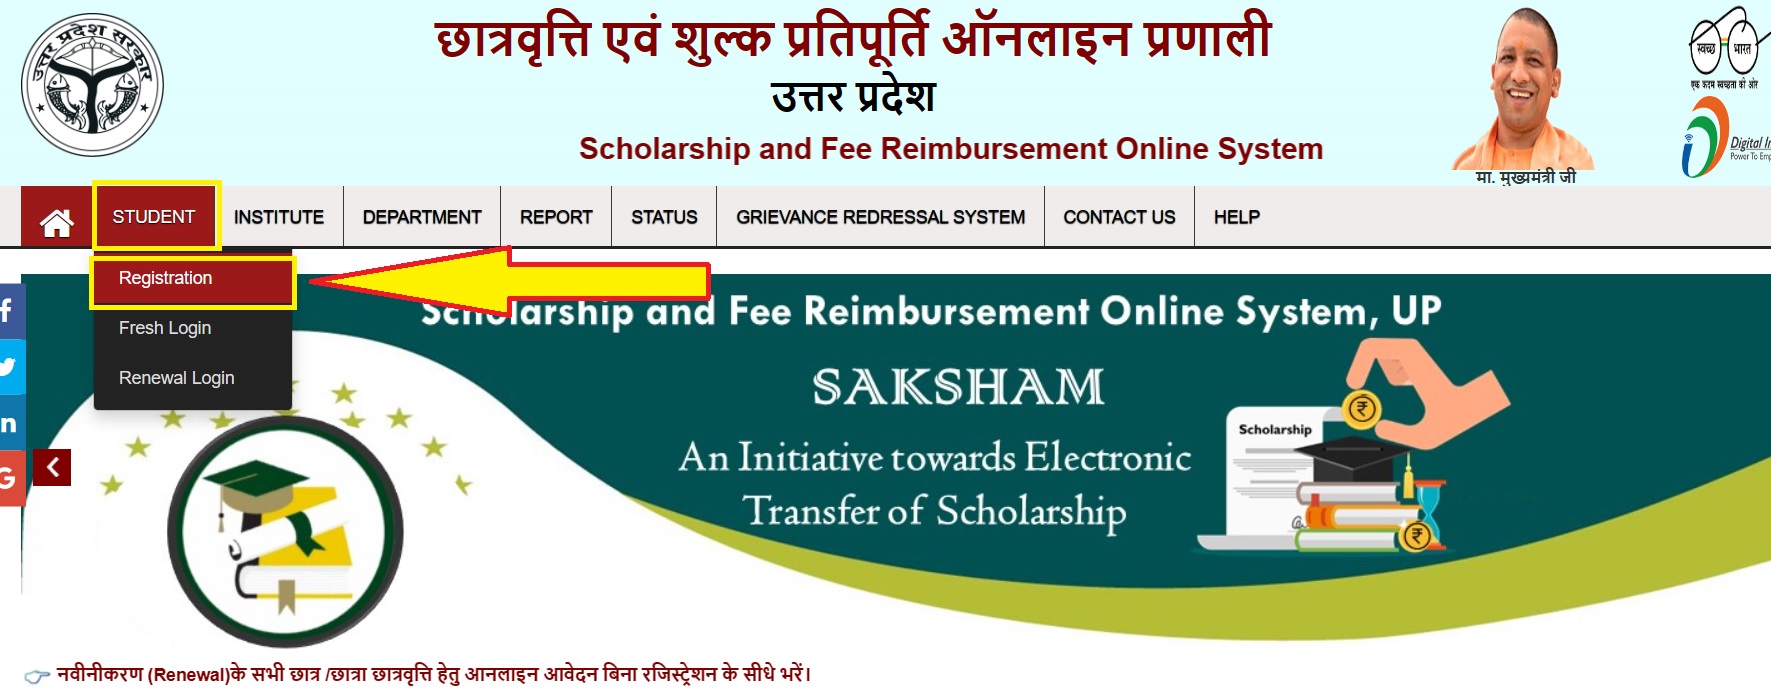 UP scholarship online apply